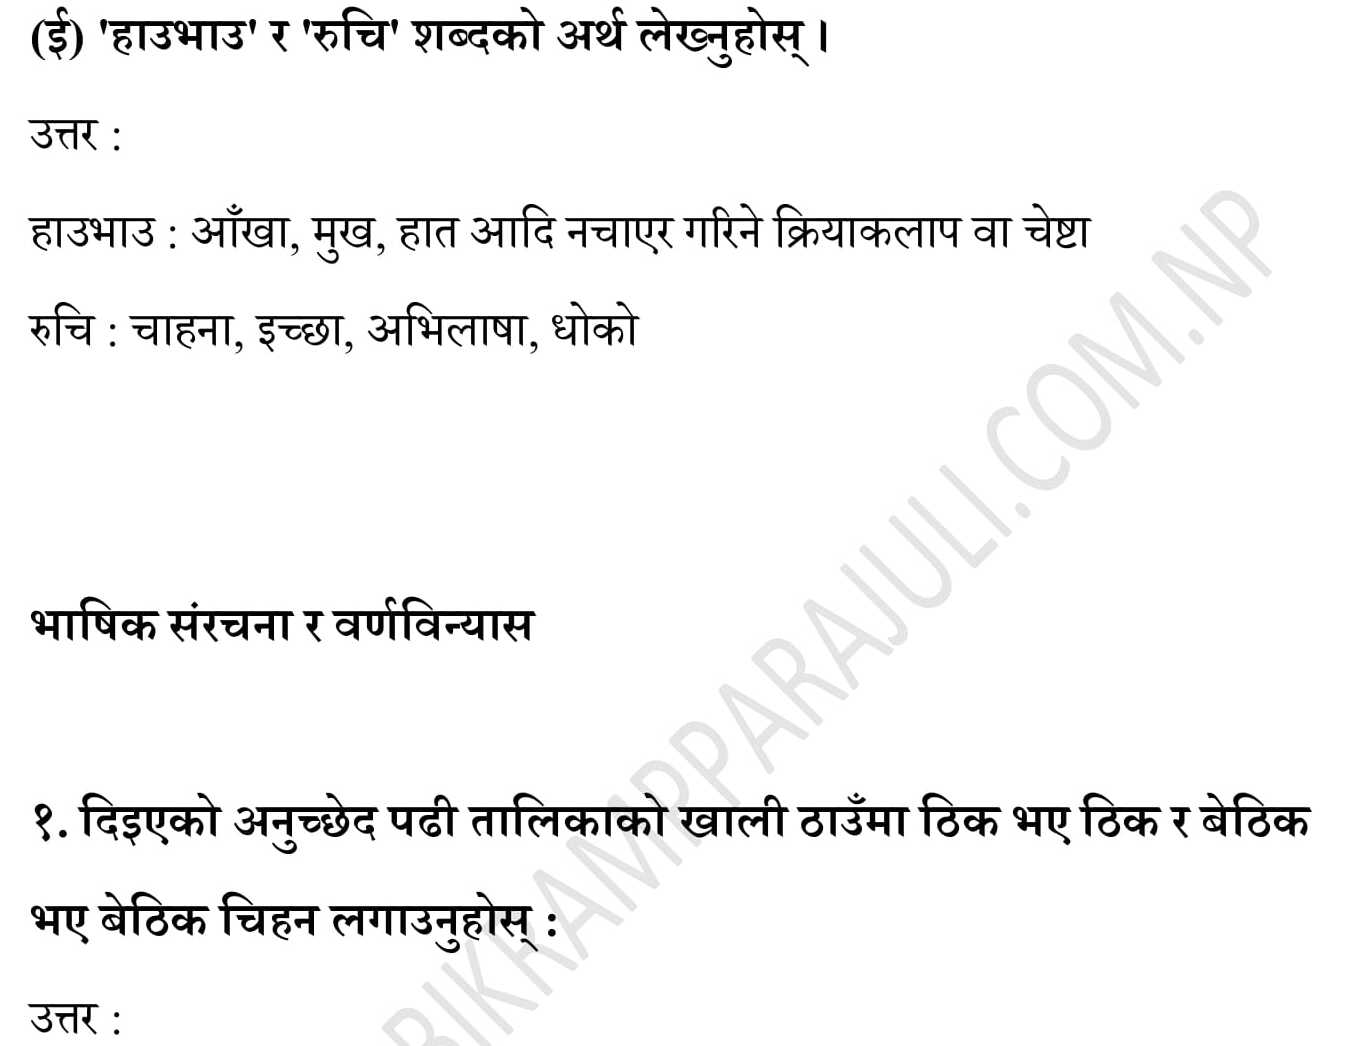 Bektito Bikash ma Bidhalaya ko Bhumika Questions answers